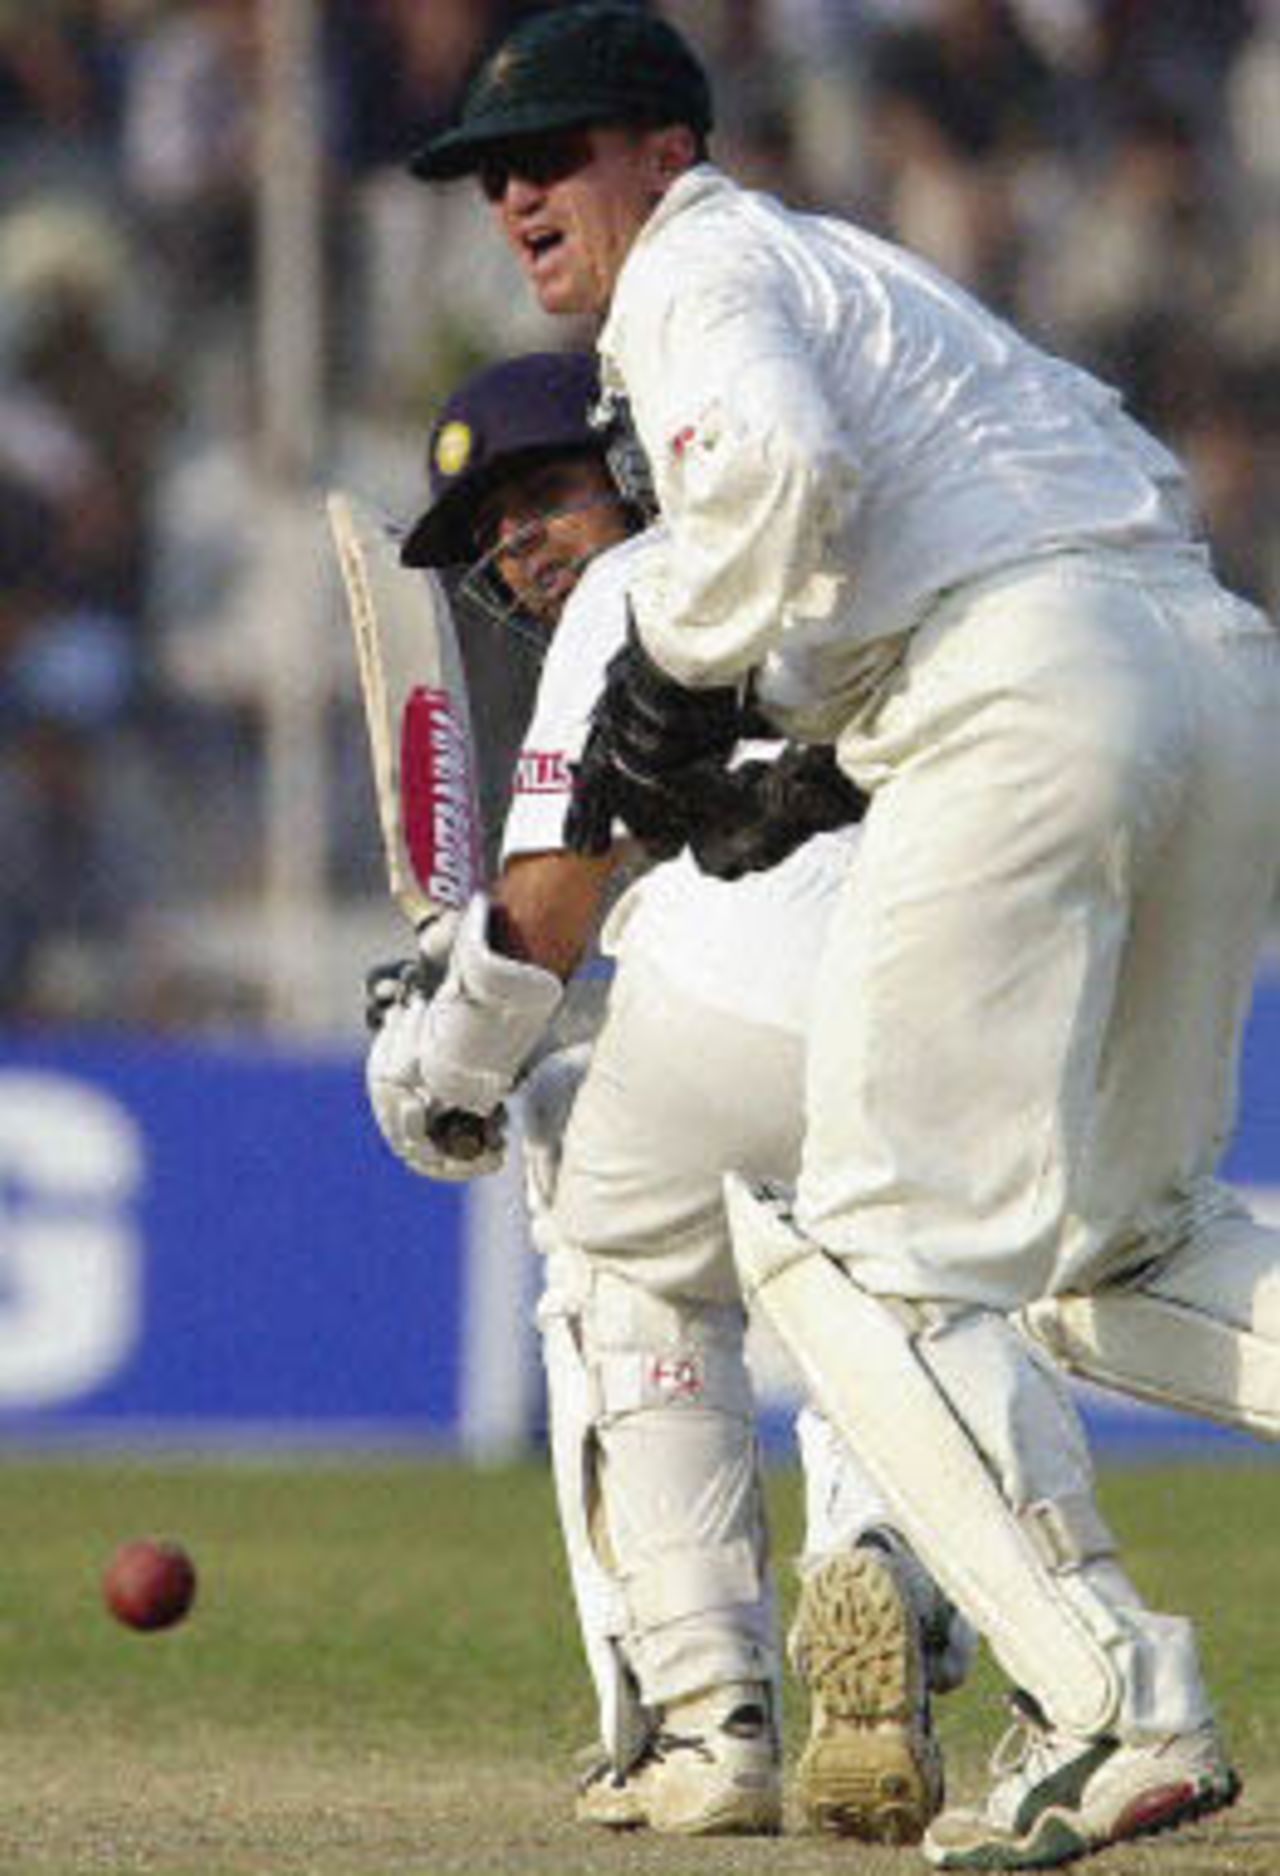 Rahul Dravid flicks the ball from Grant Flower as Andy Flower watches, Zimbabwe in India, 2000/01, 1st Test, India v Zimbabwe, Feroz Shah Kotla, Delhi, 18-22 November 2000 (Day 3).